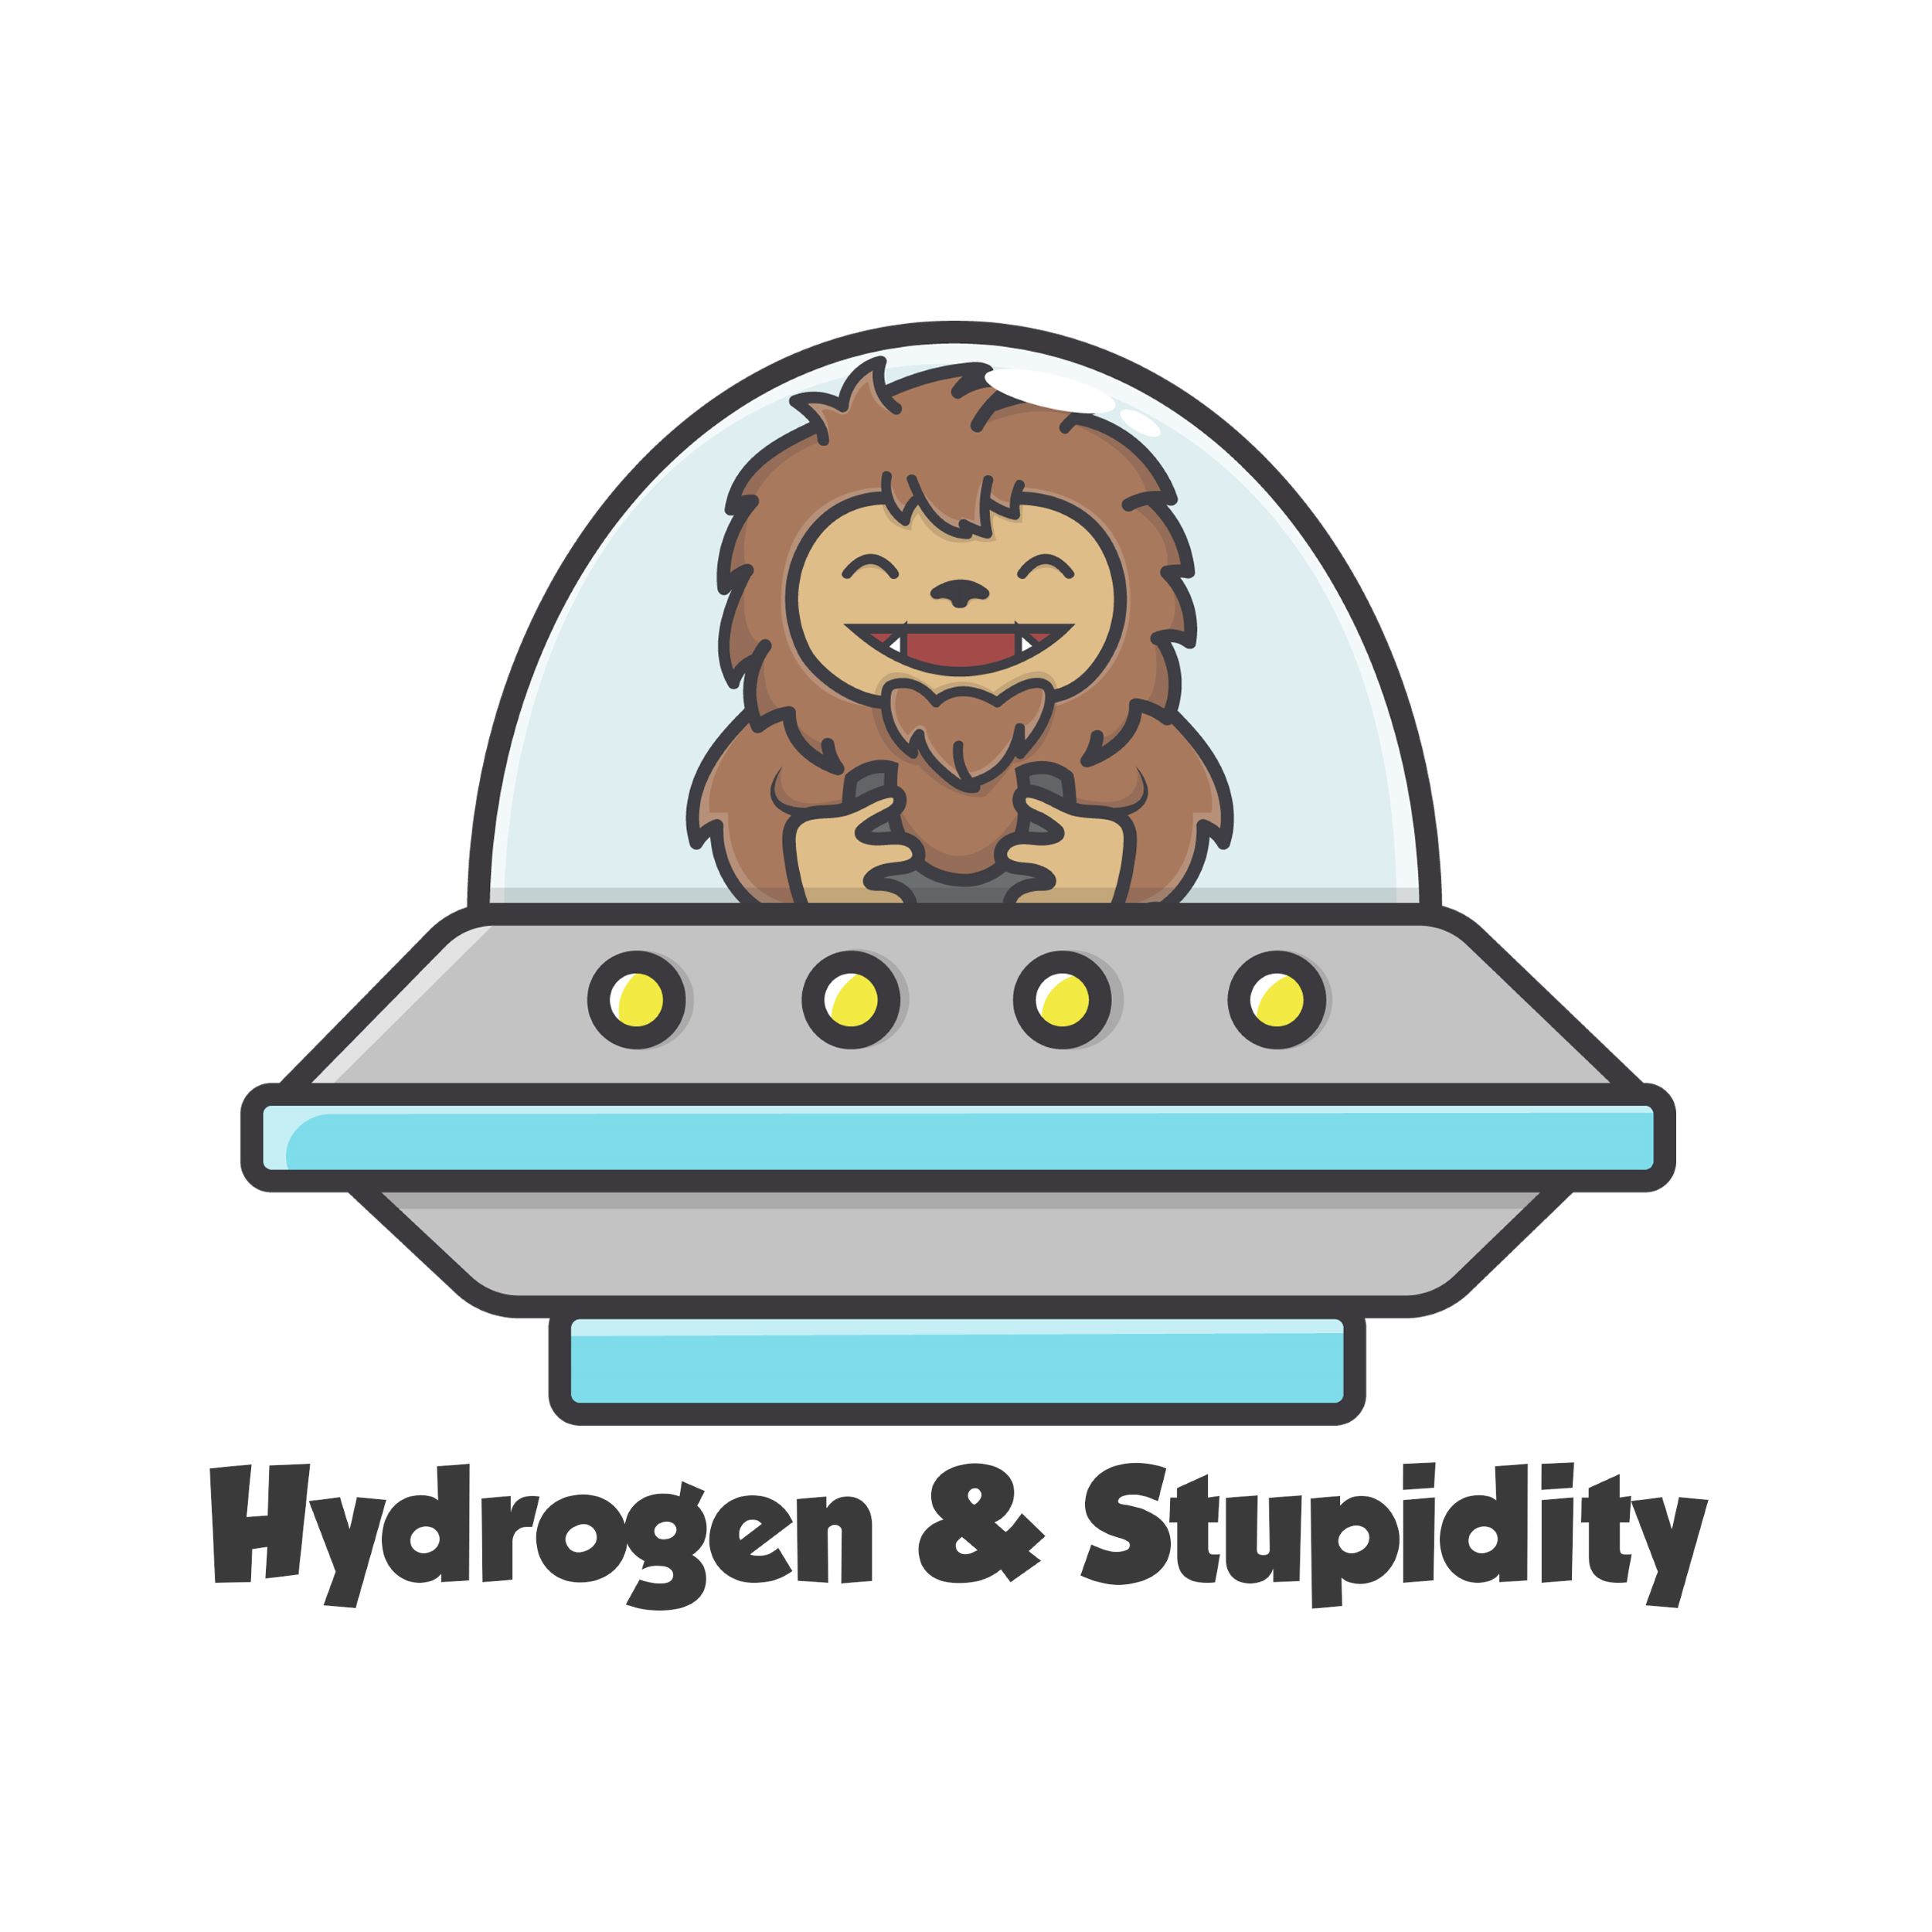 Hydrogen & Stupidity